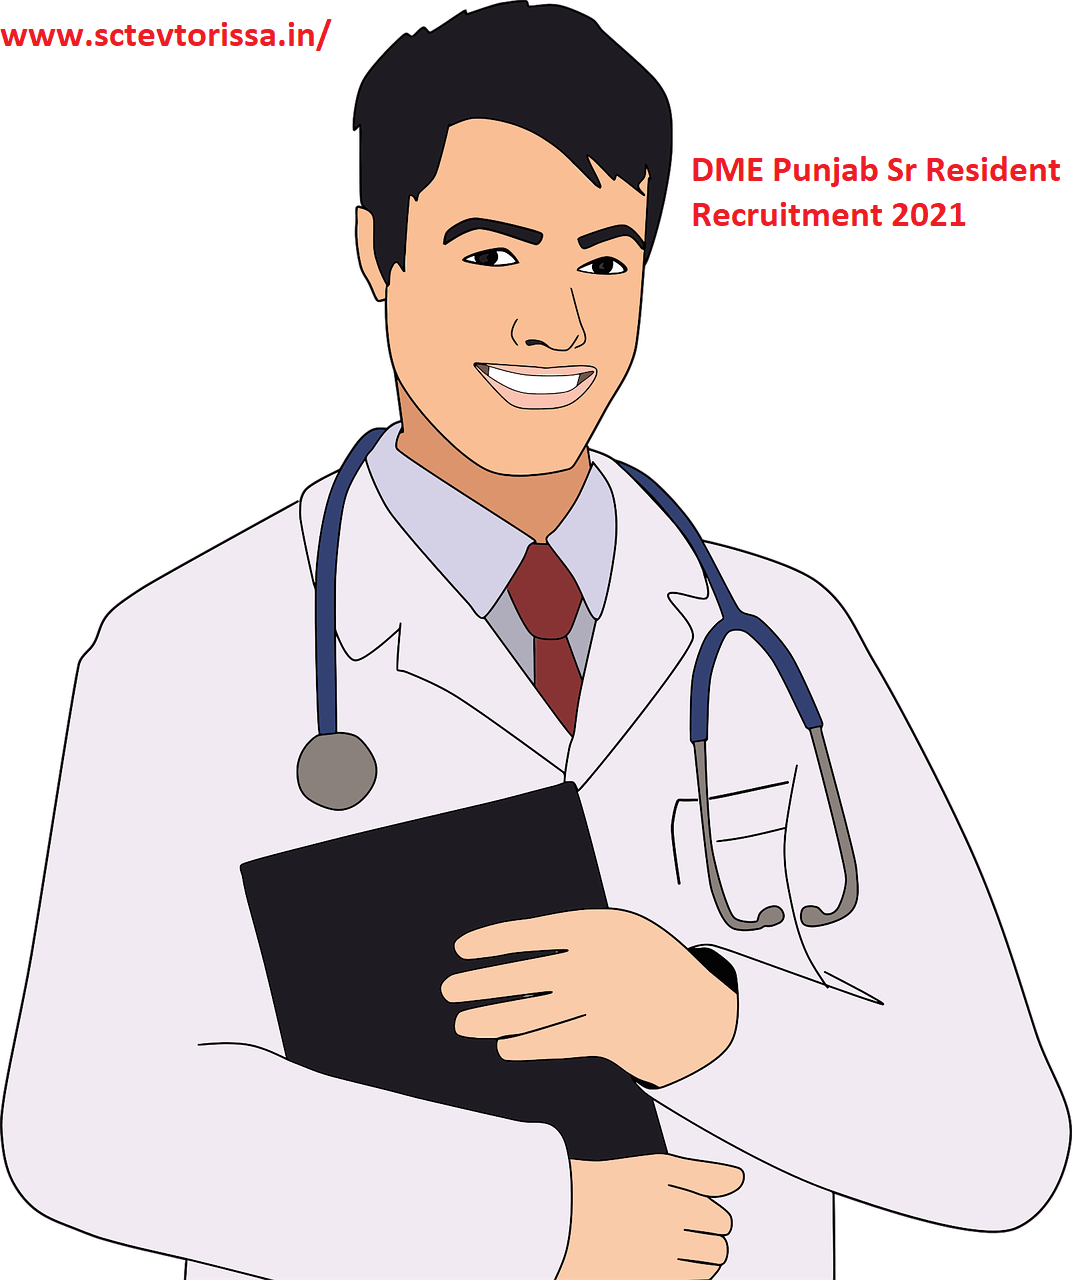 DME Punjab Sr Resident Recruitment 2021